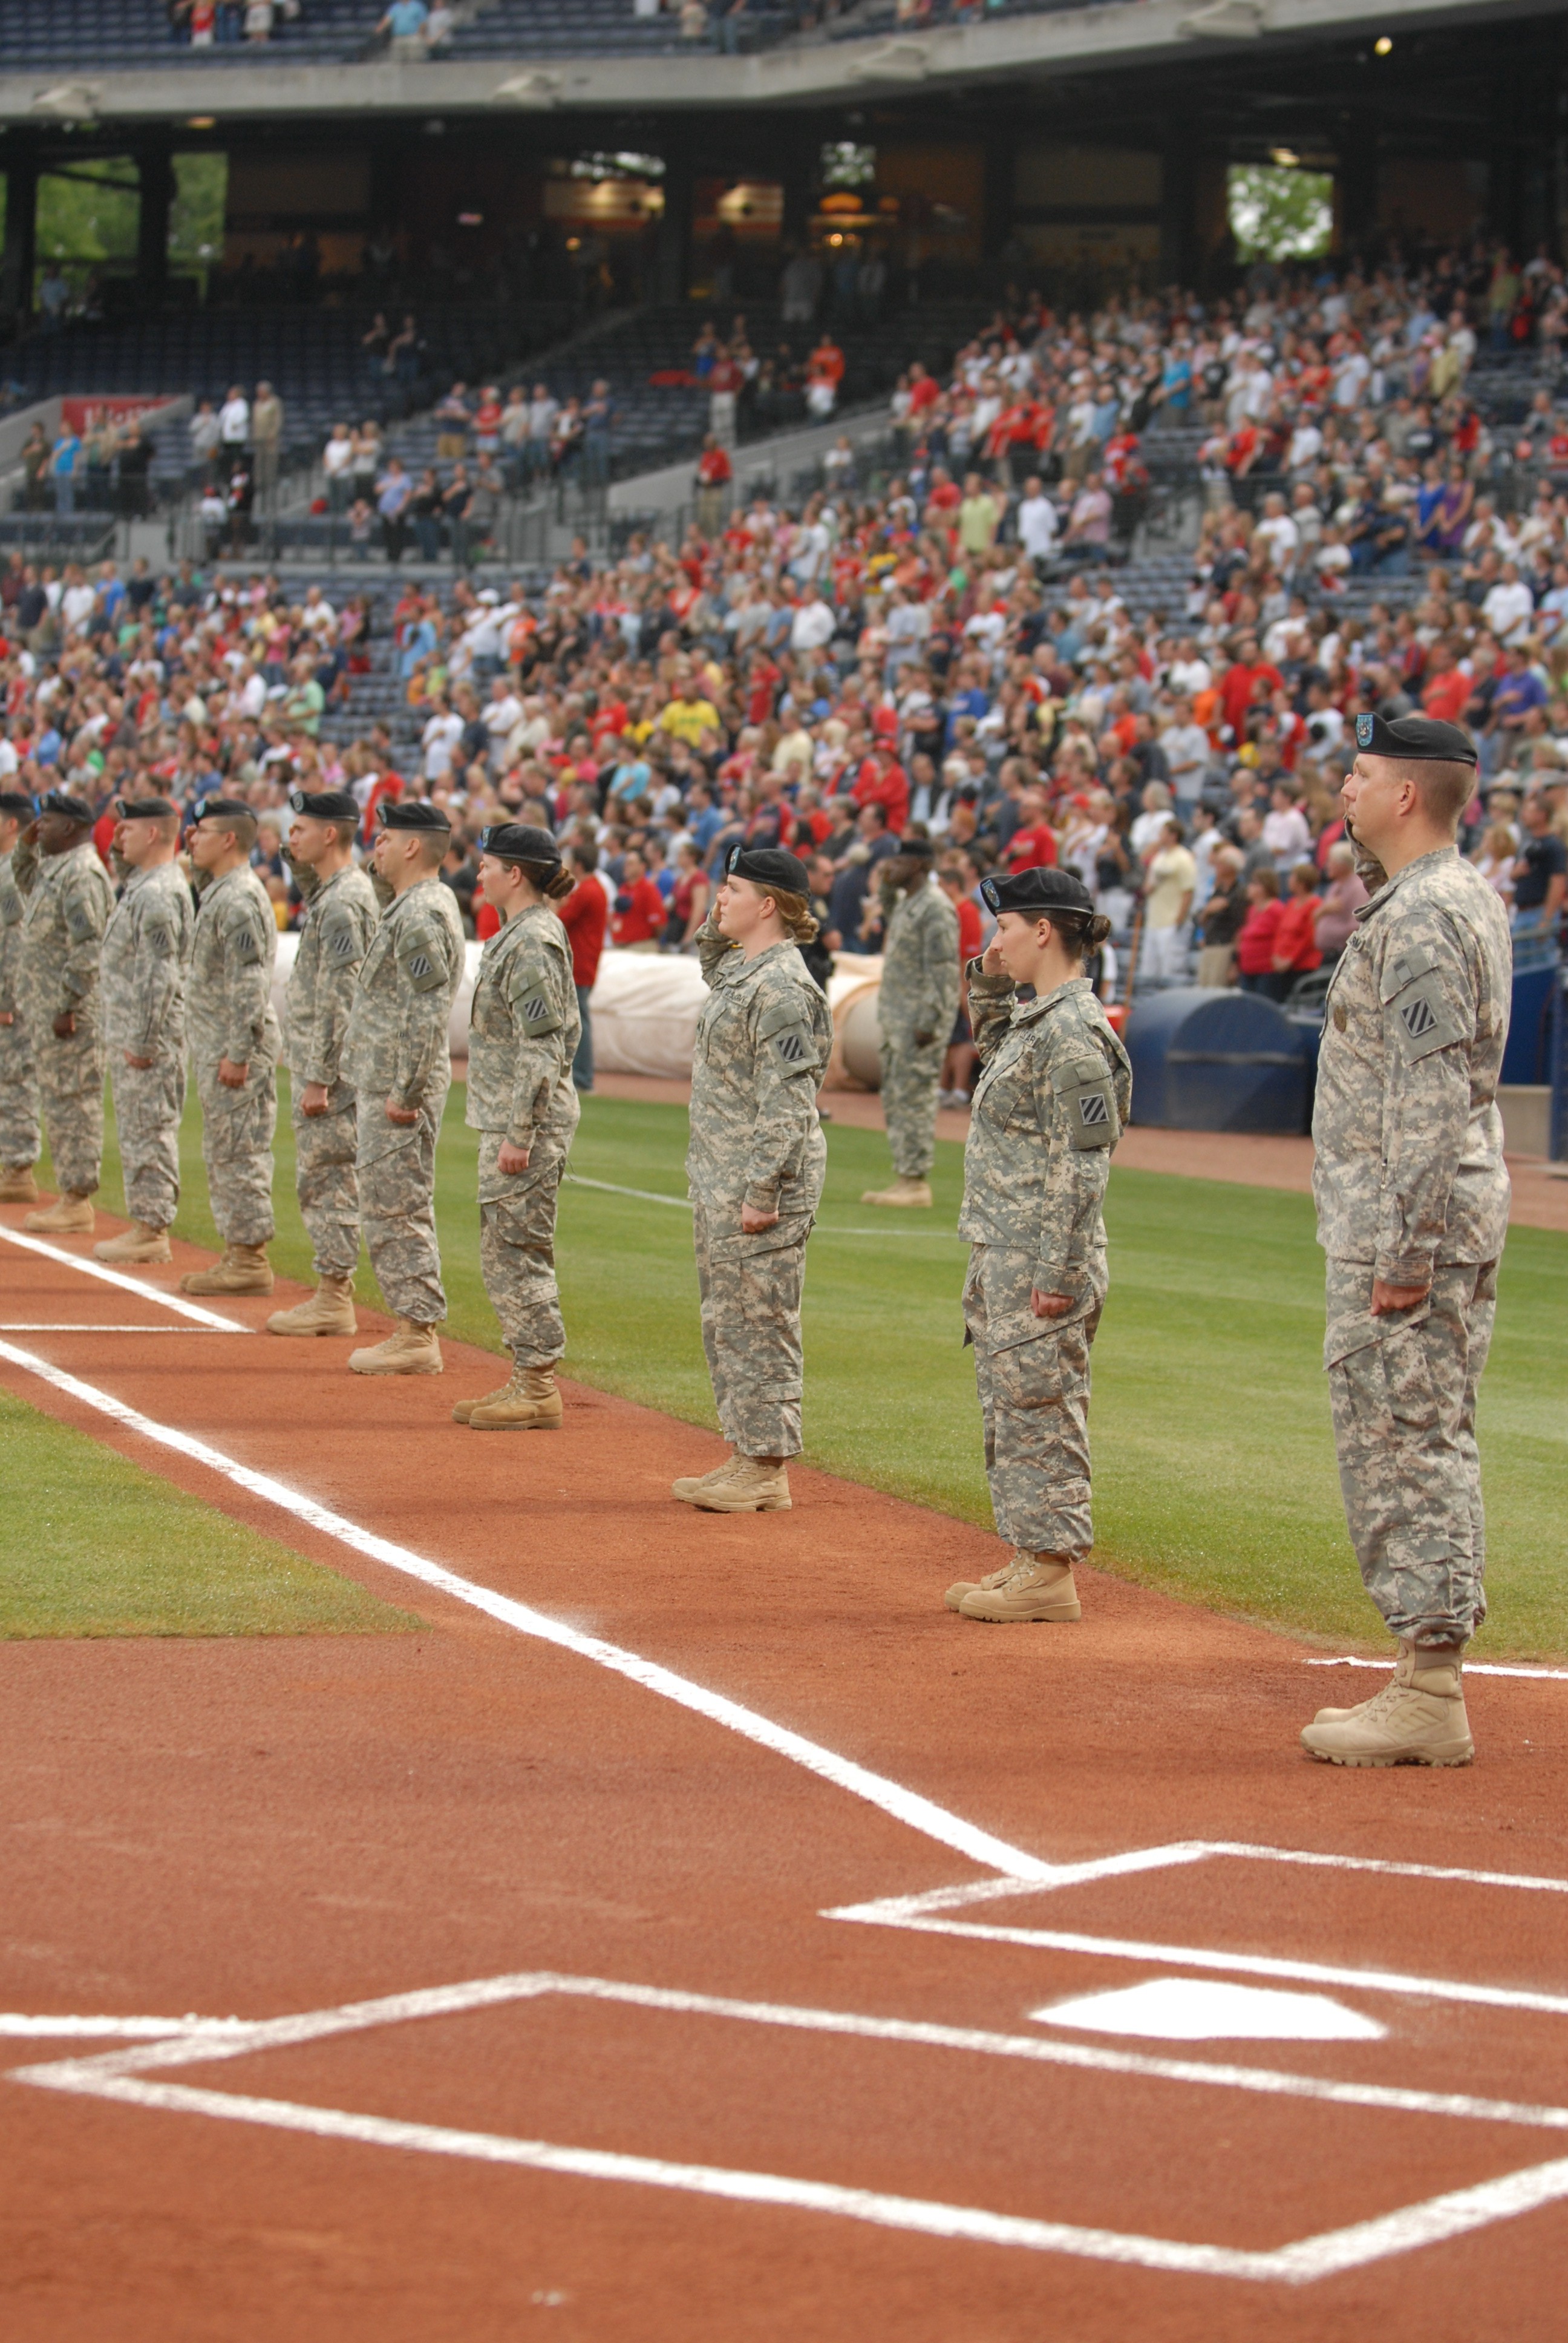 Atlanta Braves wearing Memorial Day uniforms